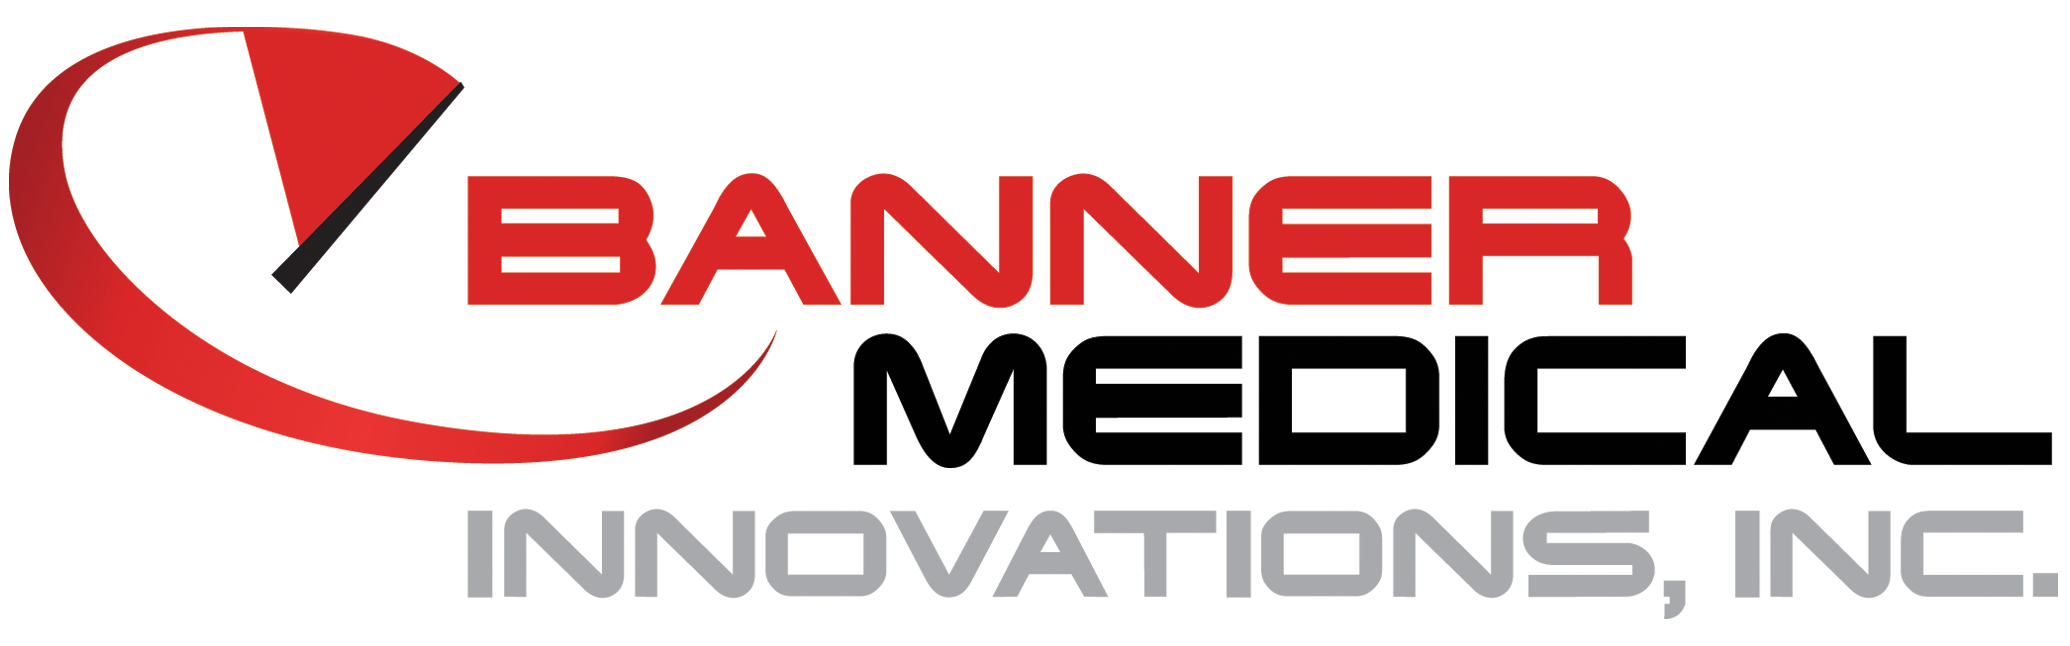 Banner Medical Innovations, Inc.